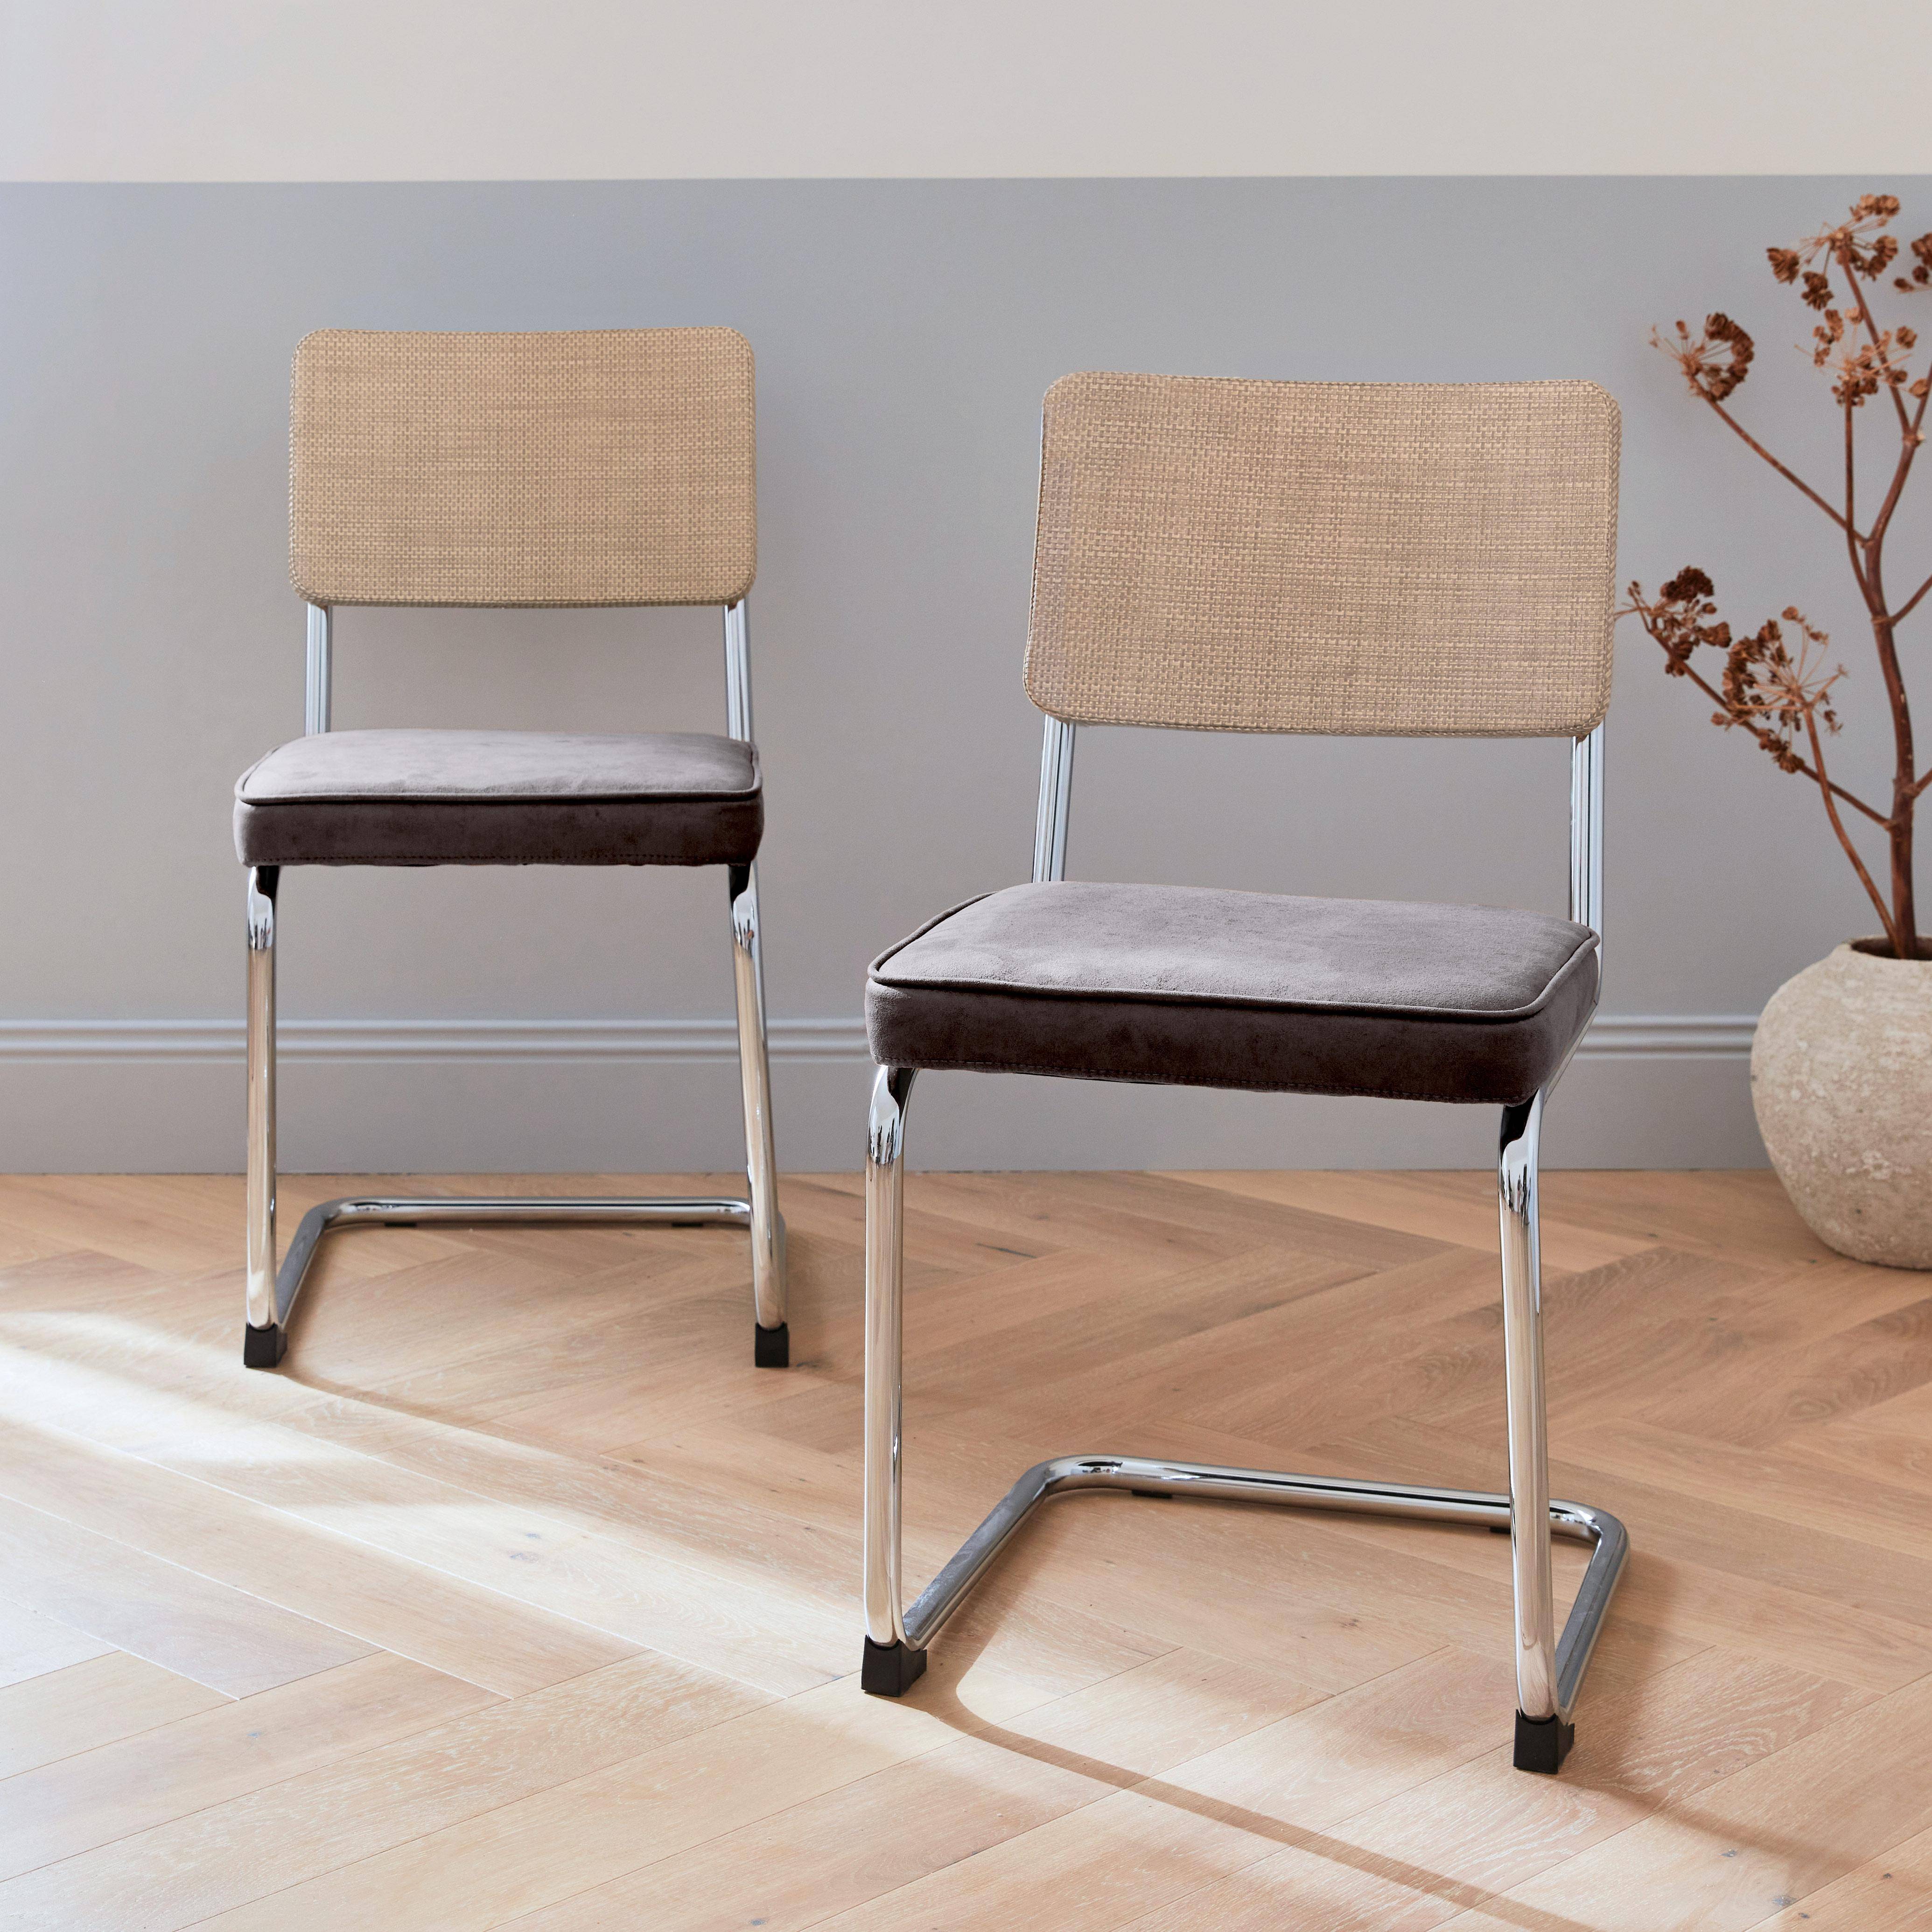 Pair of cantilever cane rattan dining chairs, 46x54.5x84.5cm - Maja - Black,sweeek,Photo2